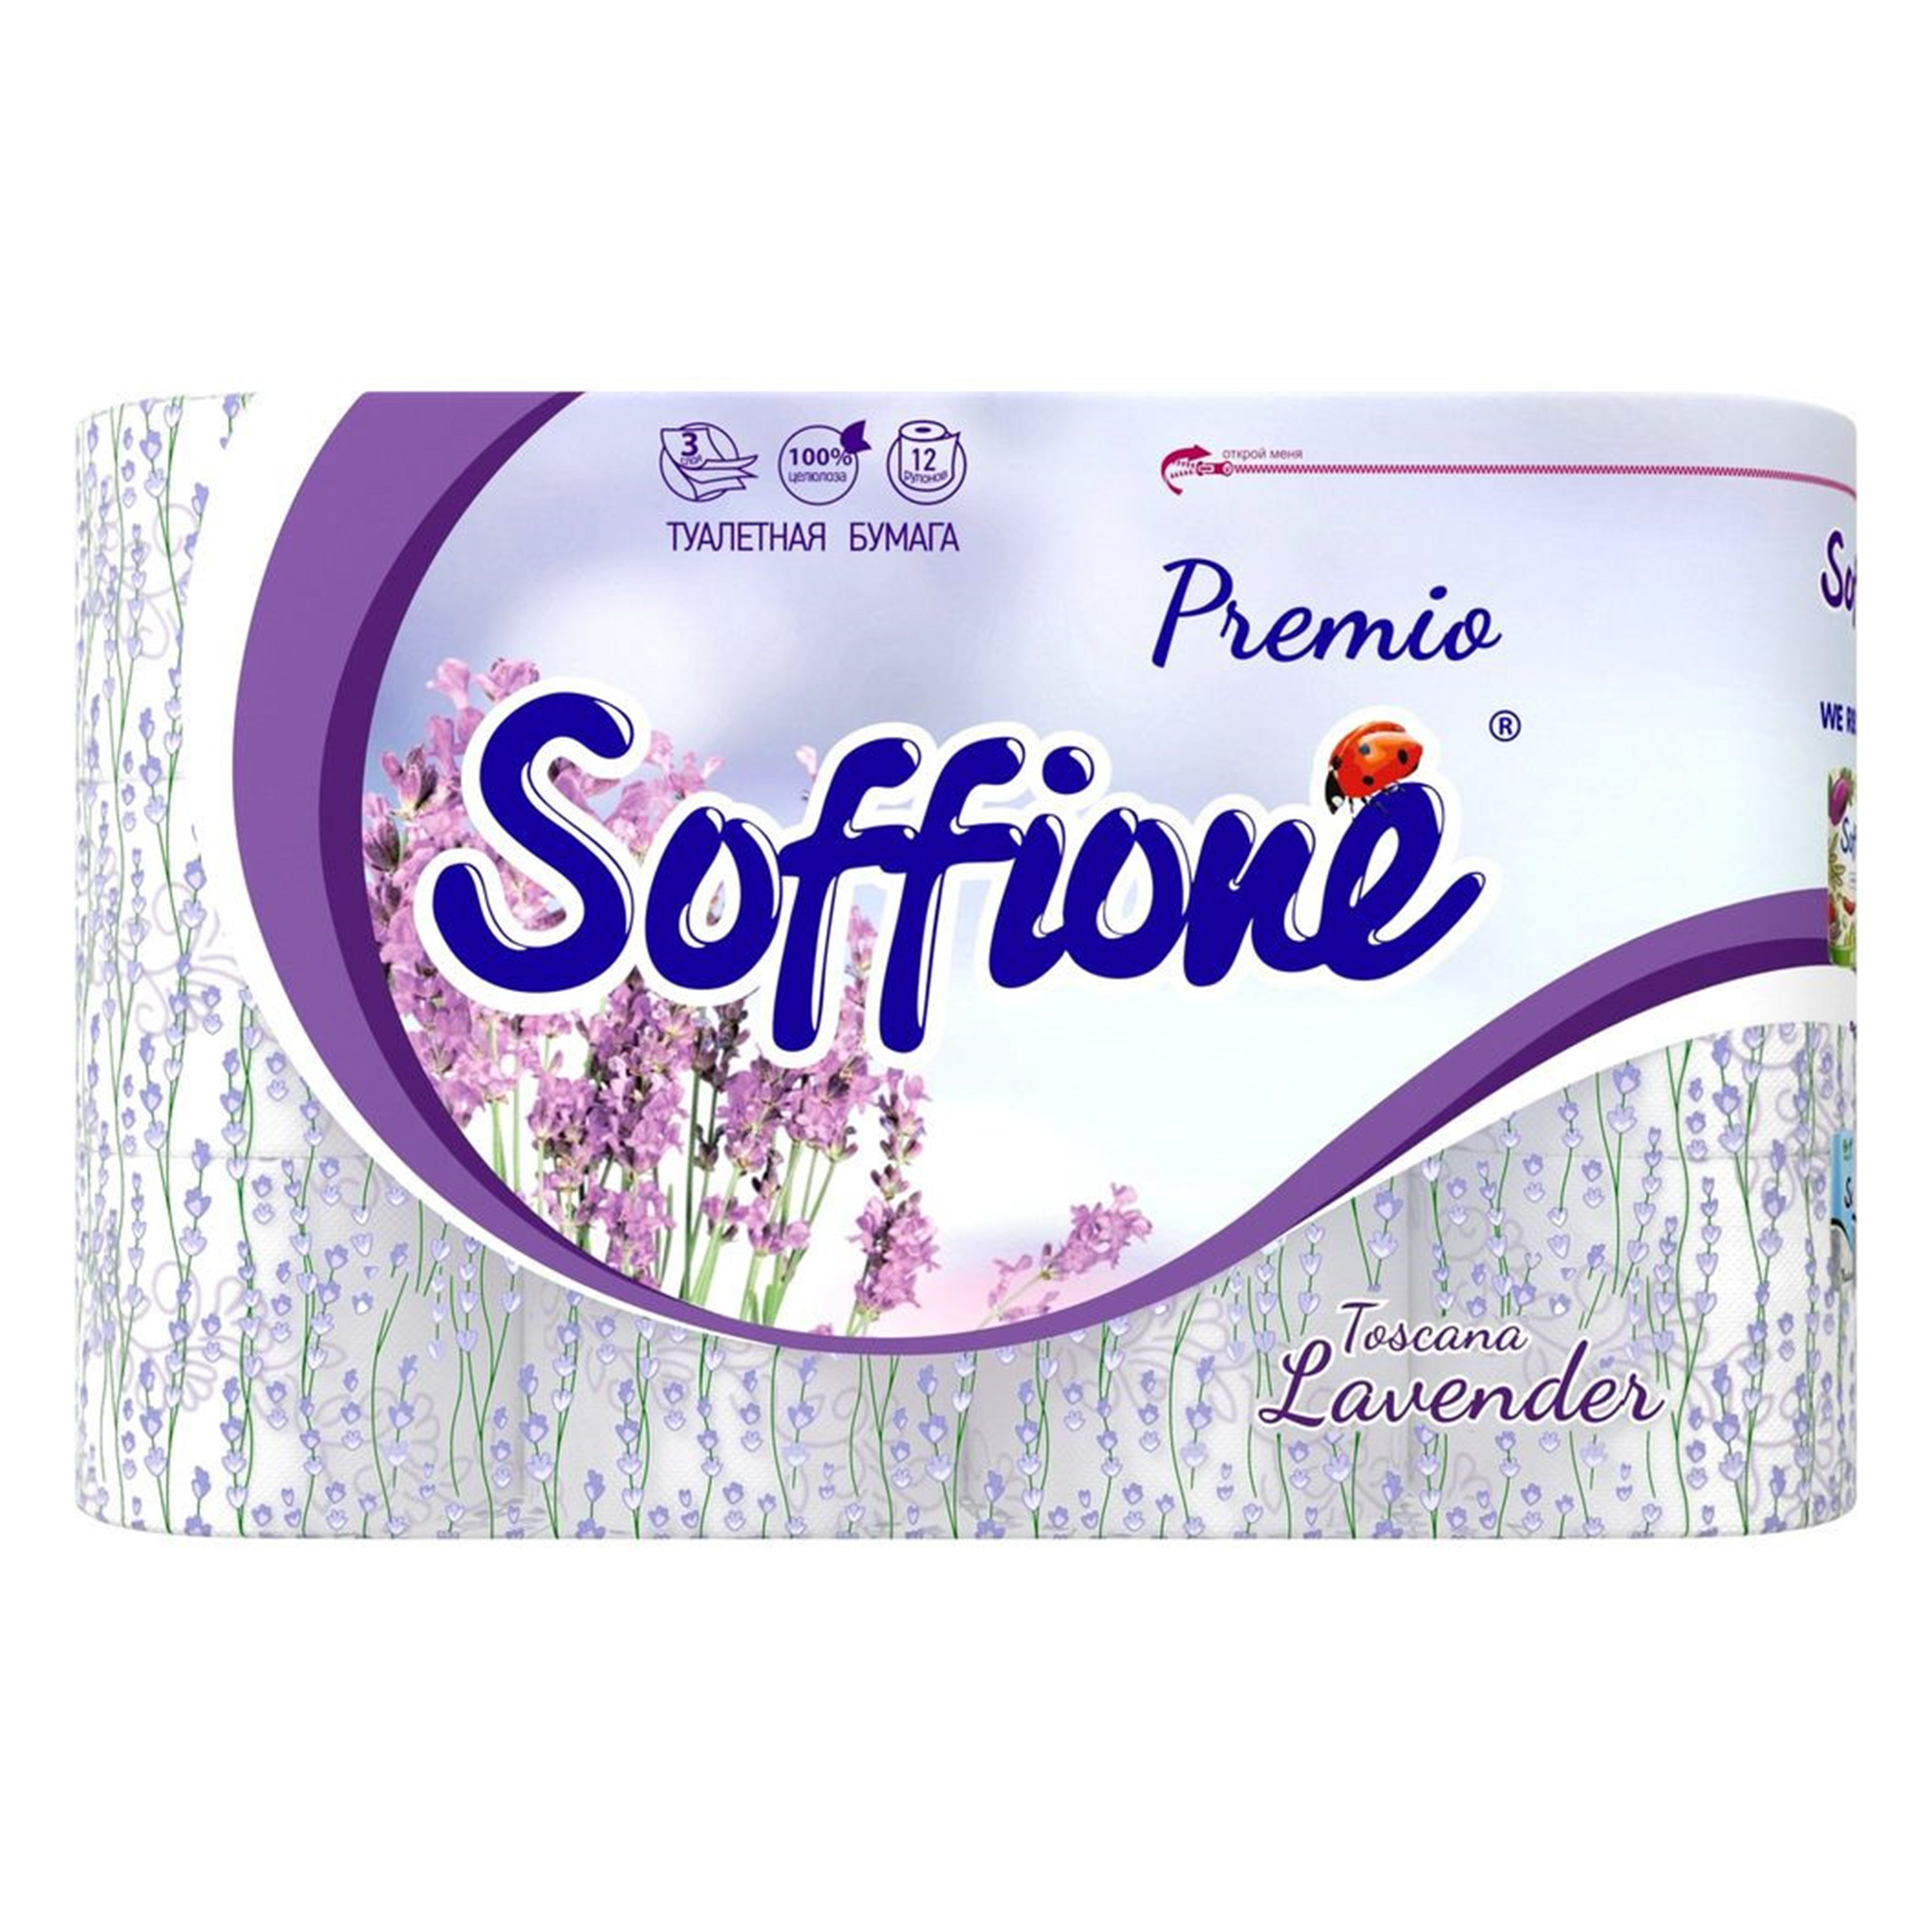 Туалетная бумага Soffione Premio Lavender 3 слоя 12 рулонов бумага туалетная plushe light 4 рулона 2 слоя 15 м белая пастель мдк 16214